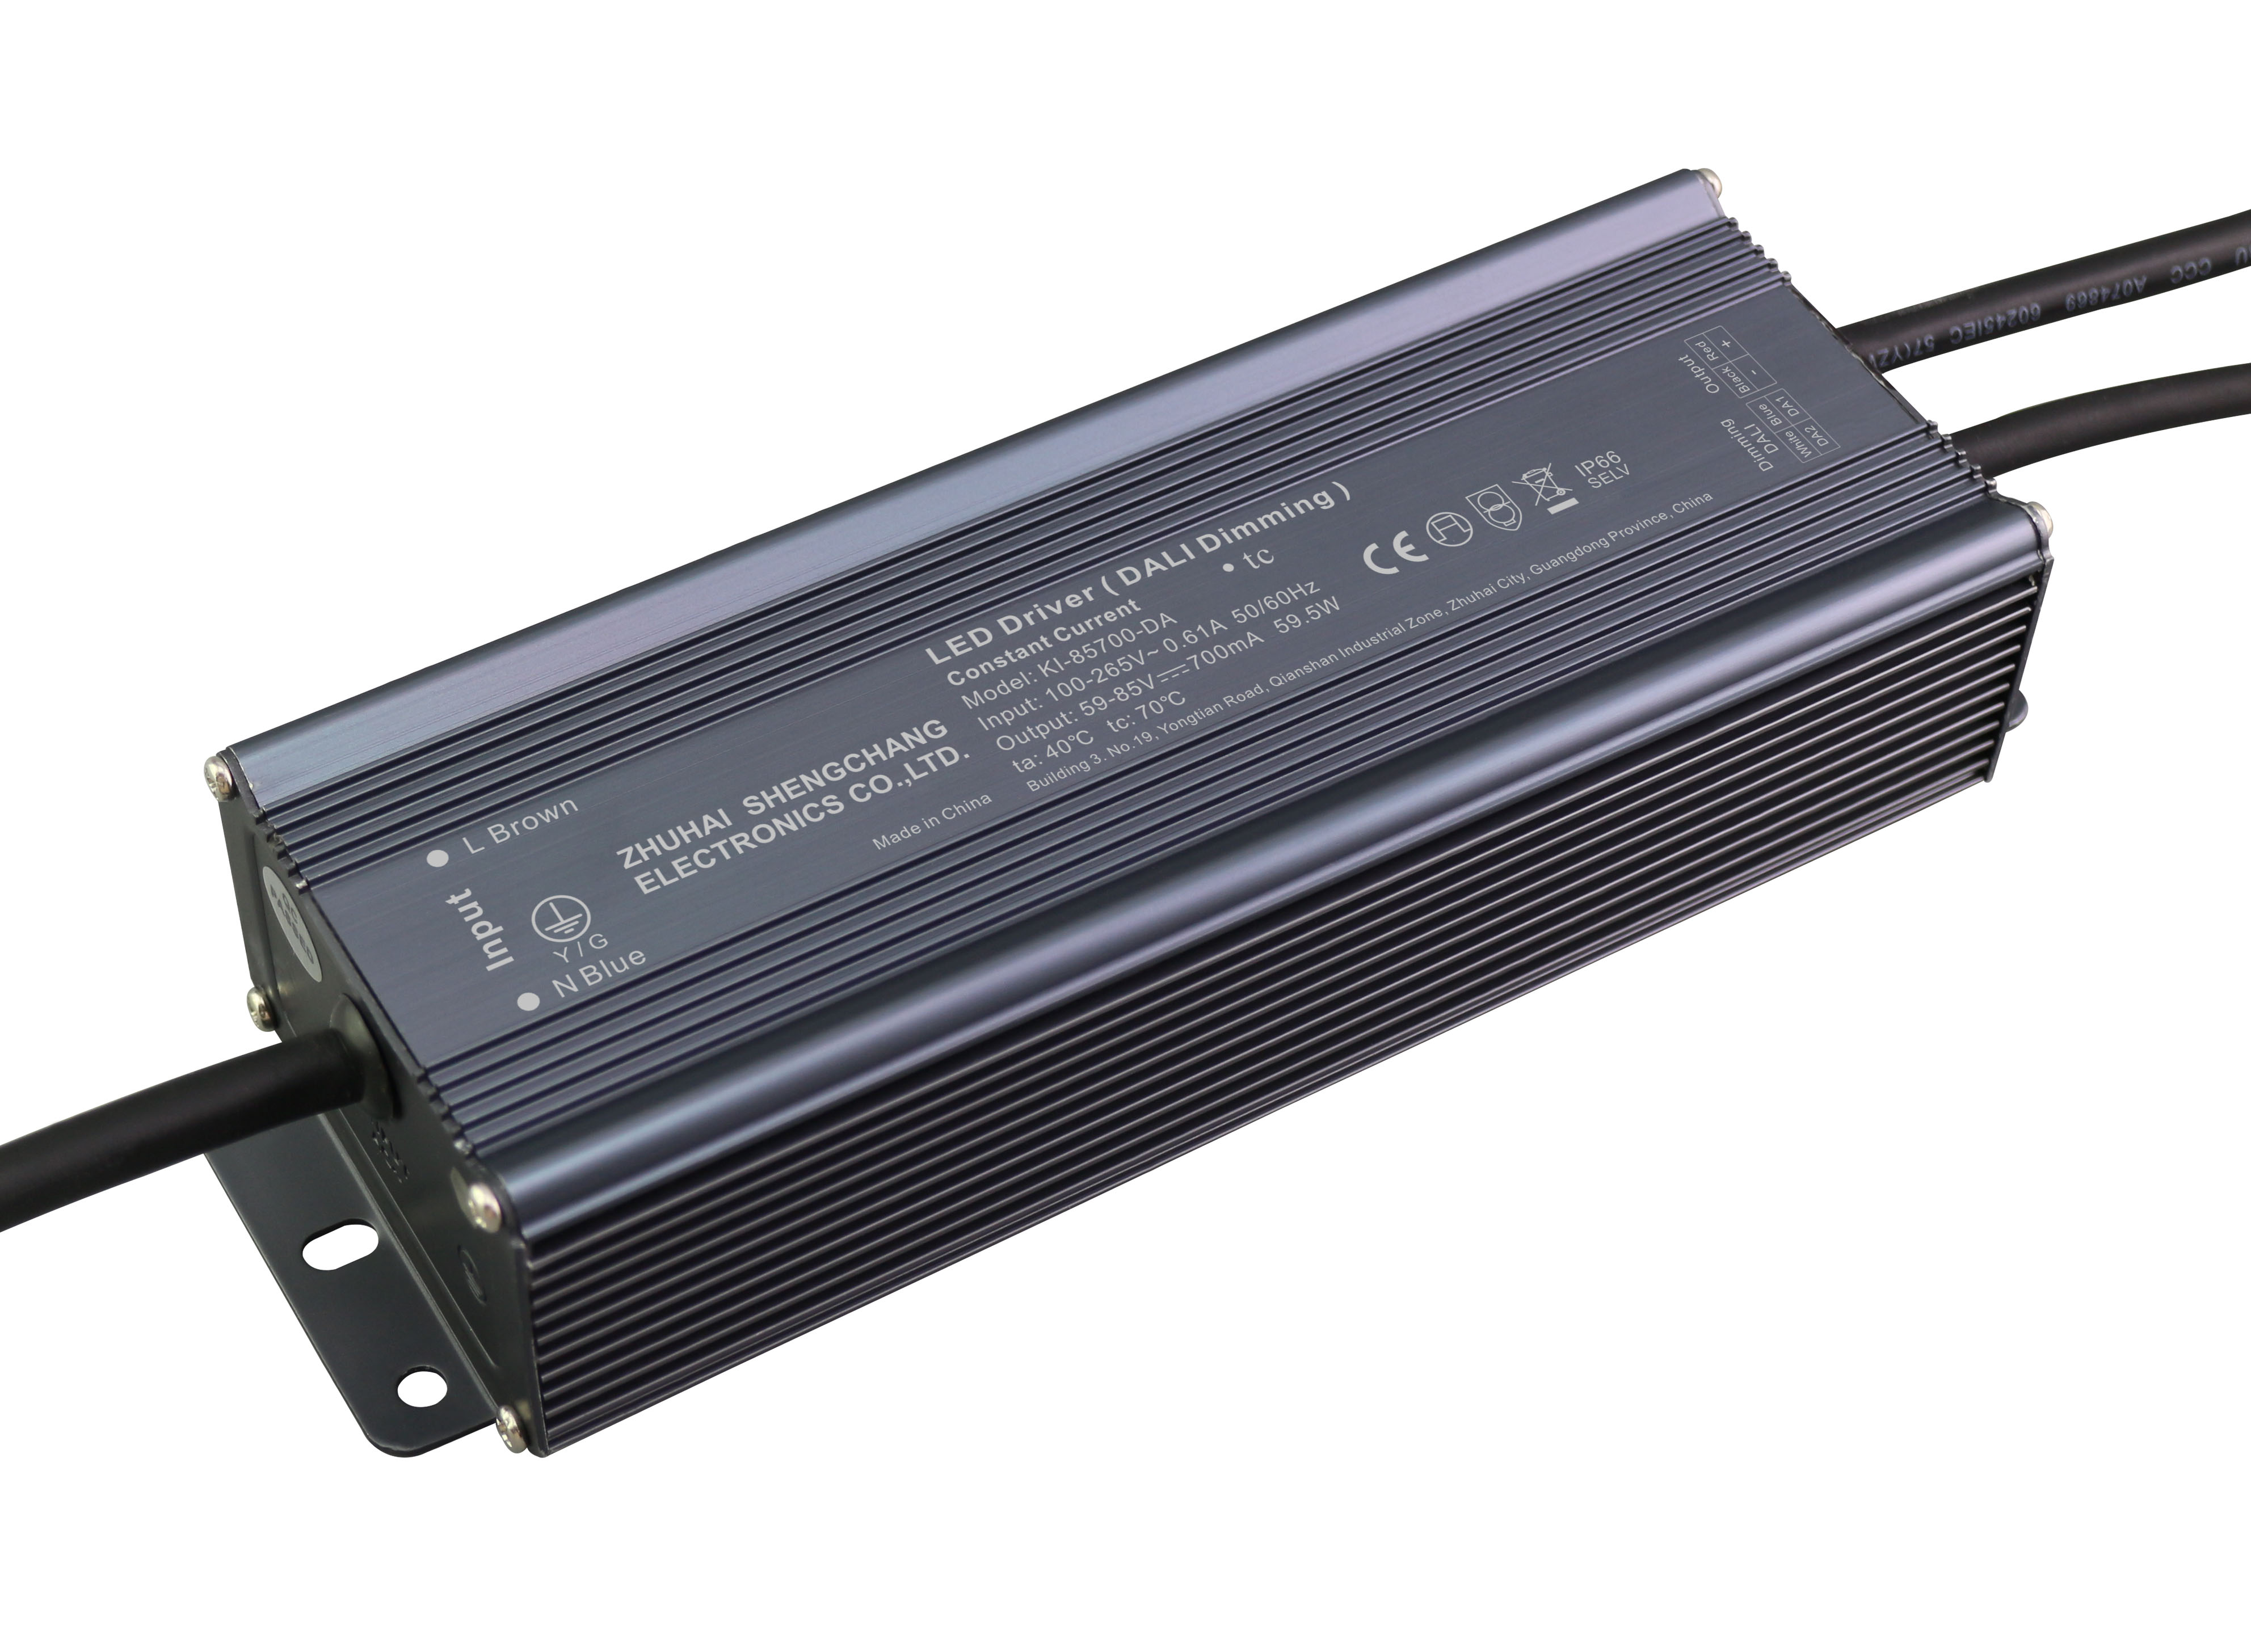 KI-DA Series 60W DALI constant current dimmable LED driver